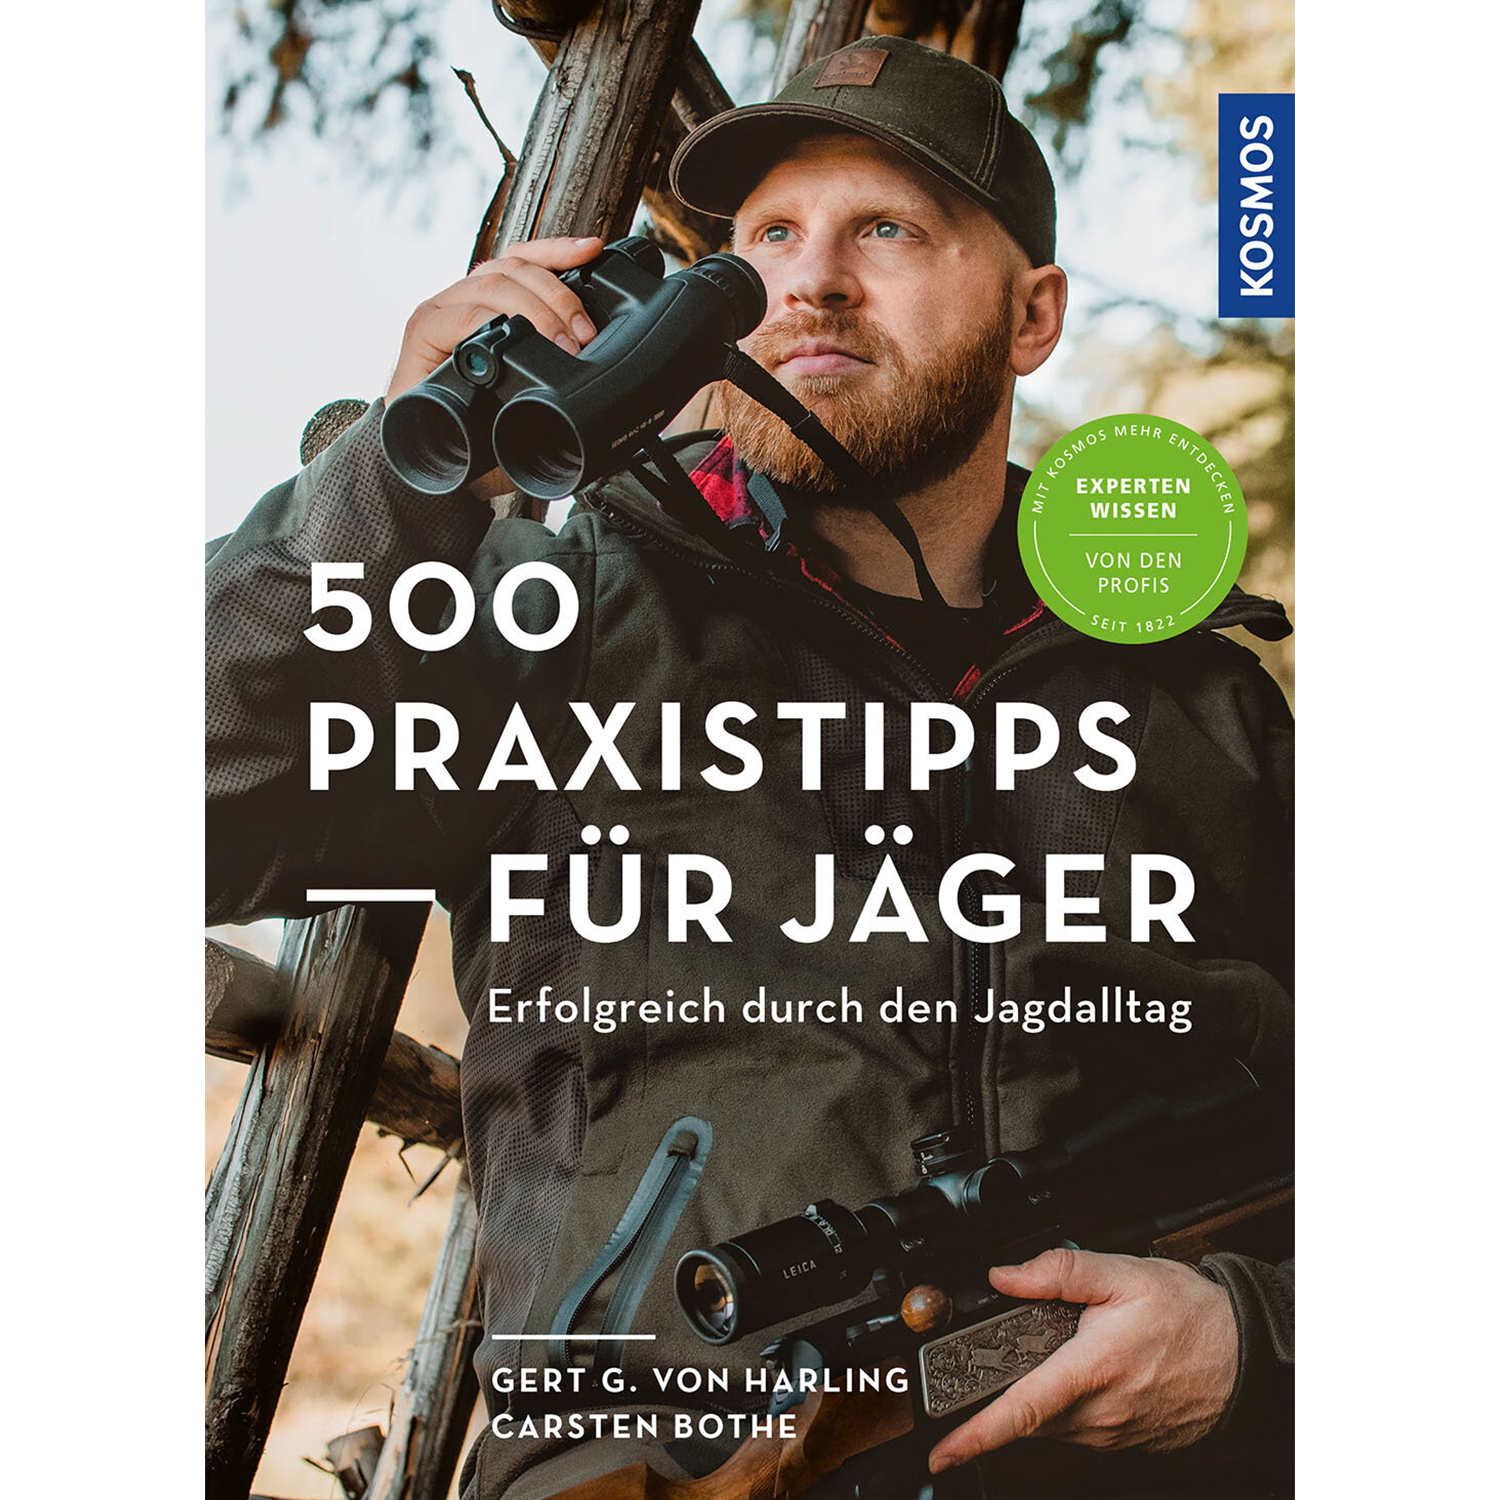 500 Praxistipps für Jäger - Buch - Harling & Bothe - Jagdausrüstung